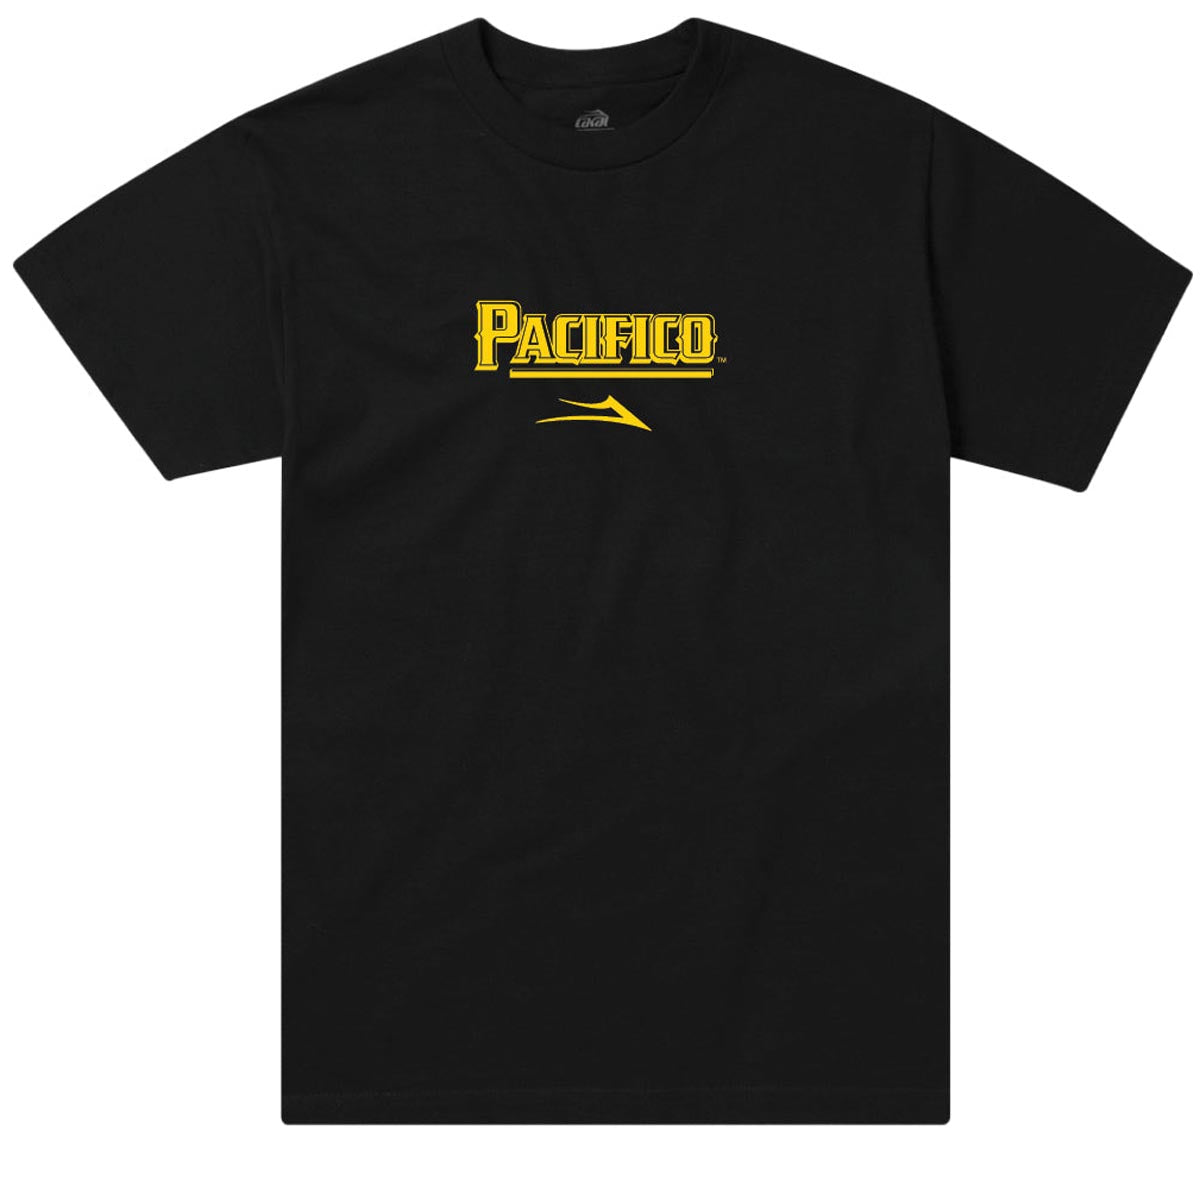 Lakai x Pacifico T-Shirt - Black image 1